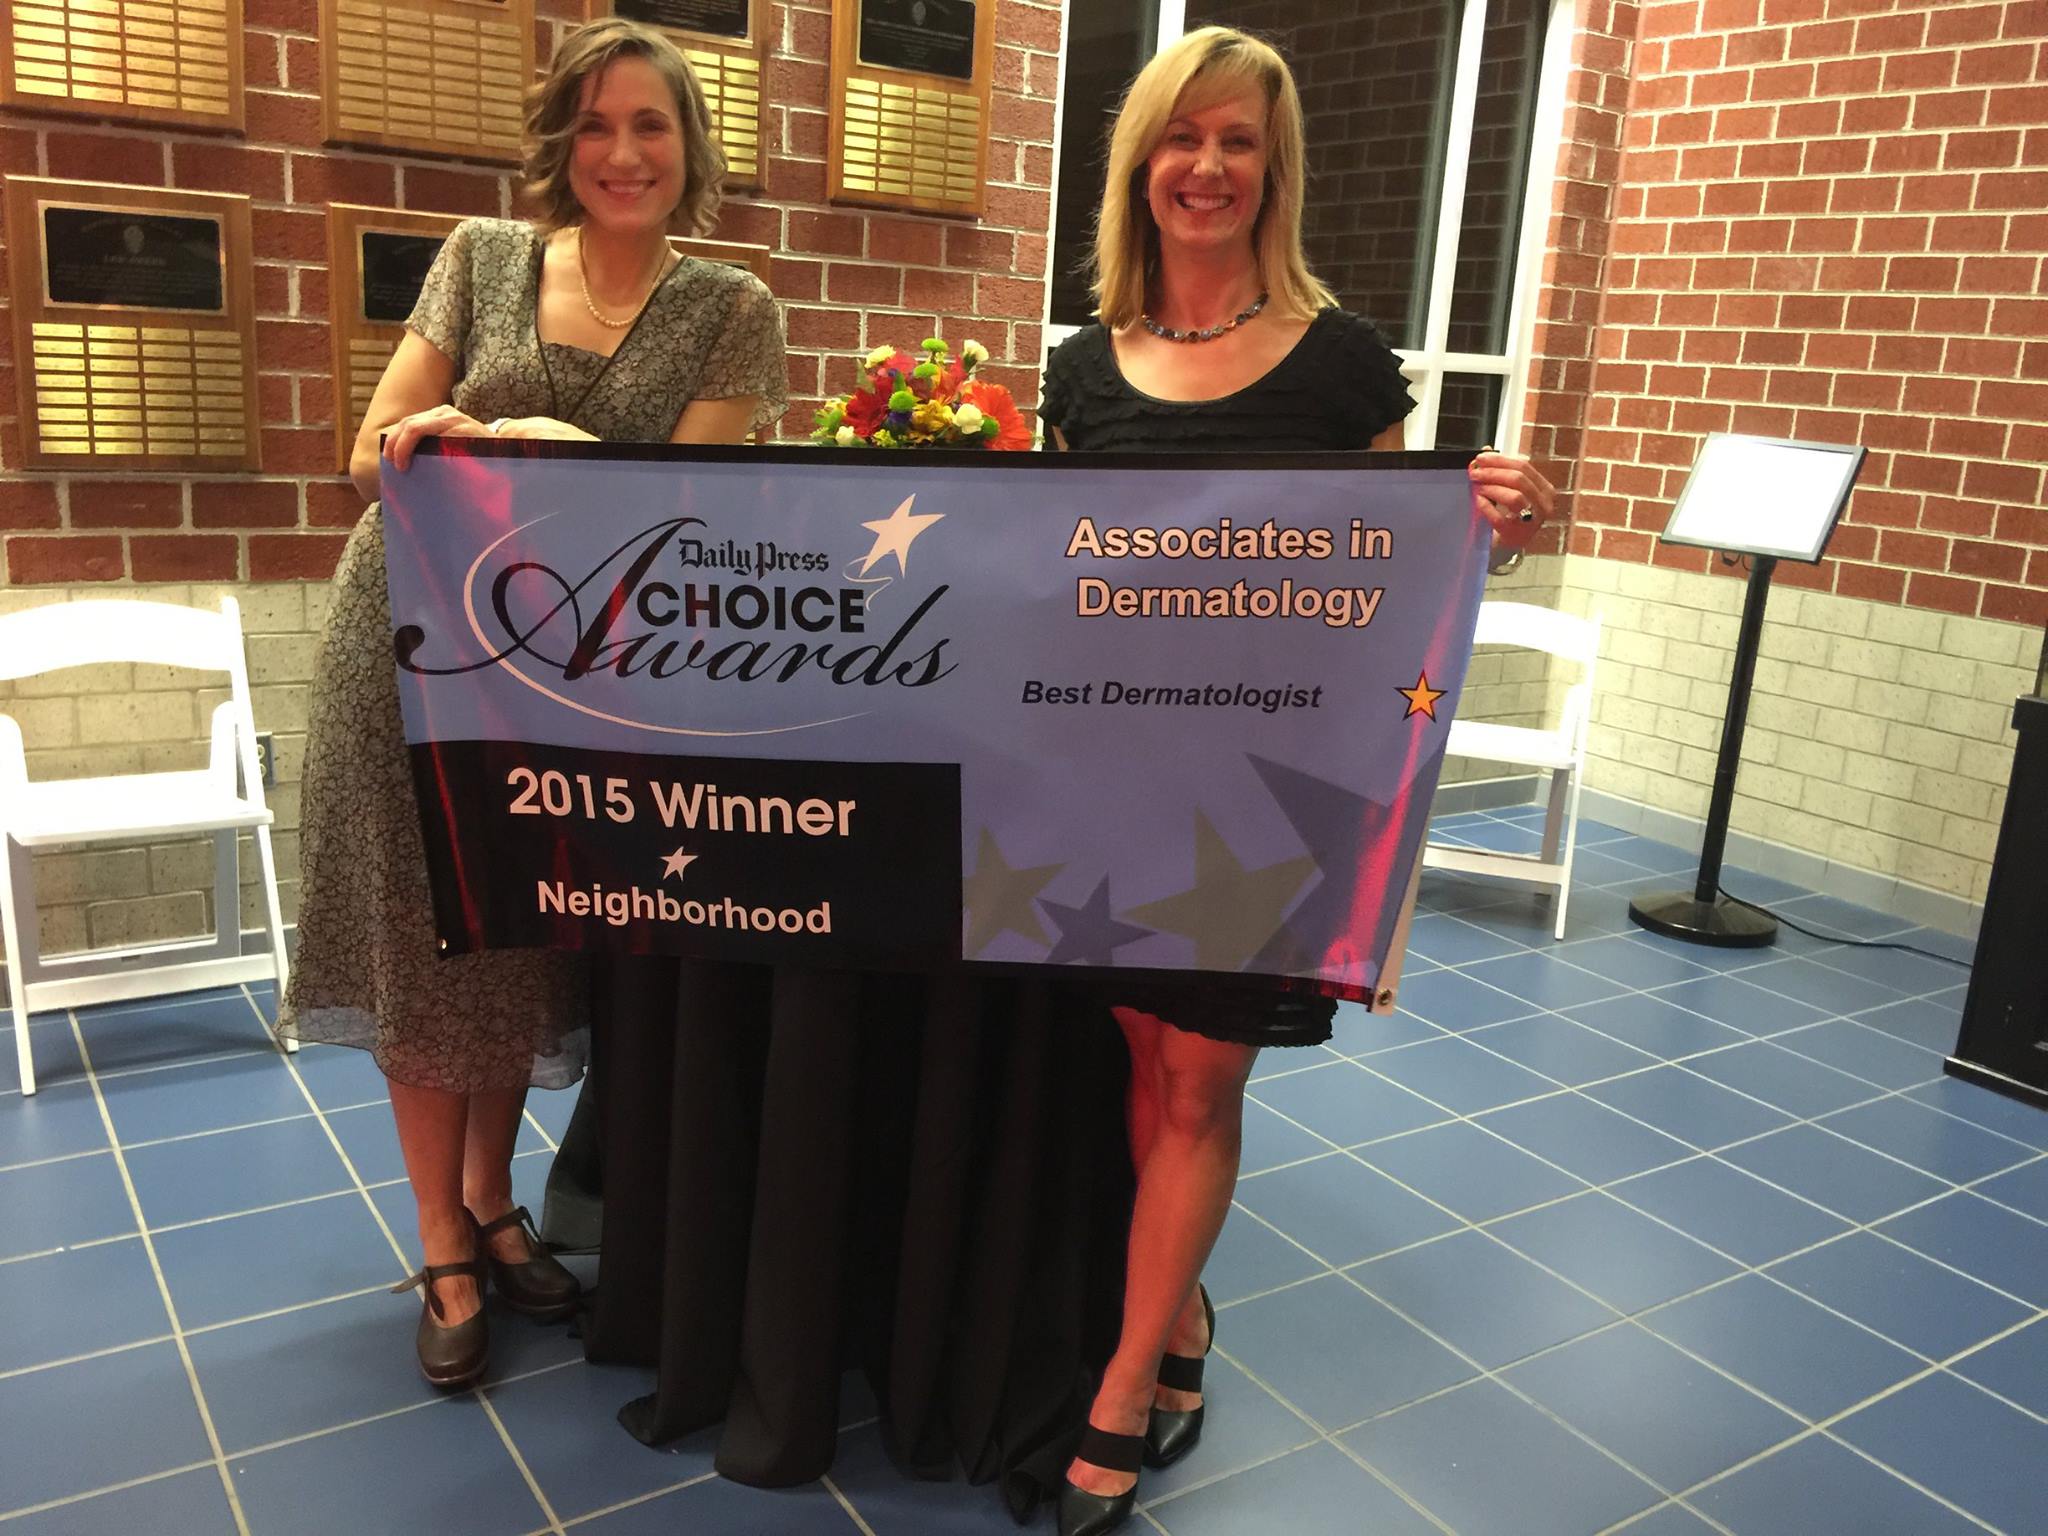 Sharing the 2015 Daily Press Choice Awards Winner Banner